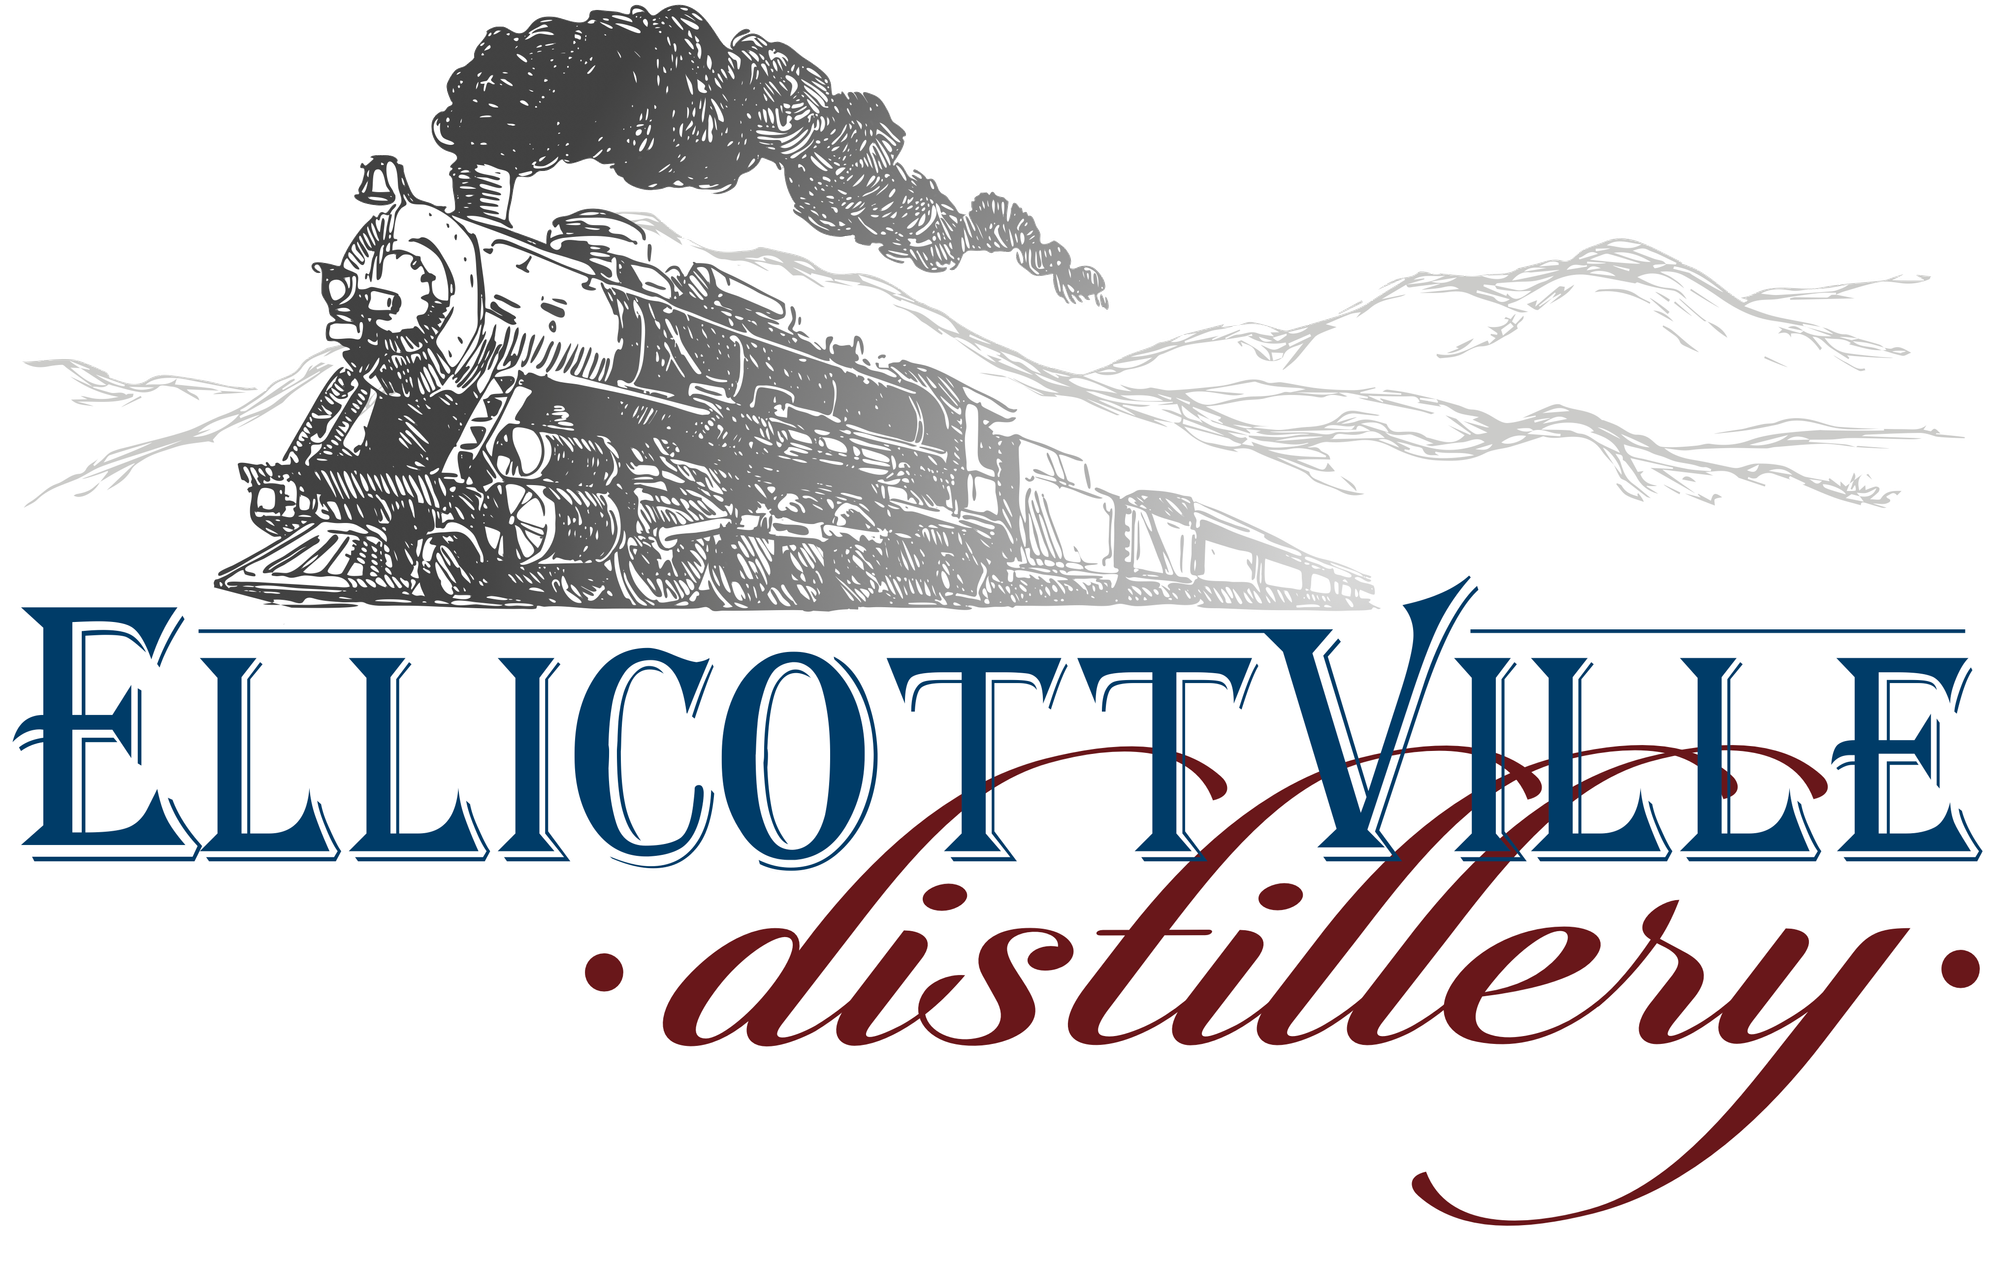 Ellicottville Distillery